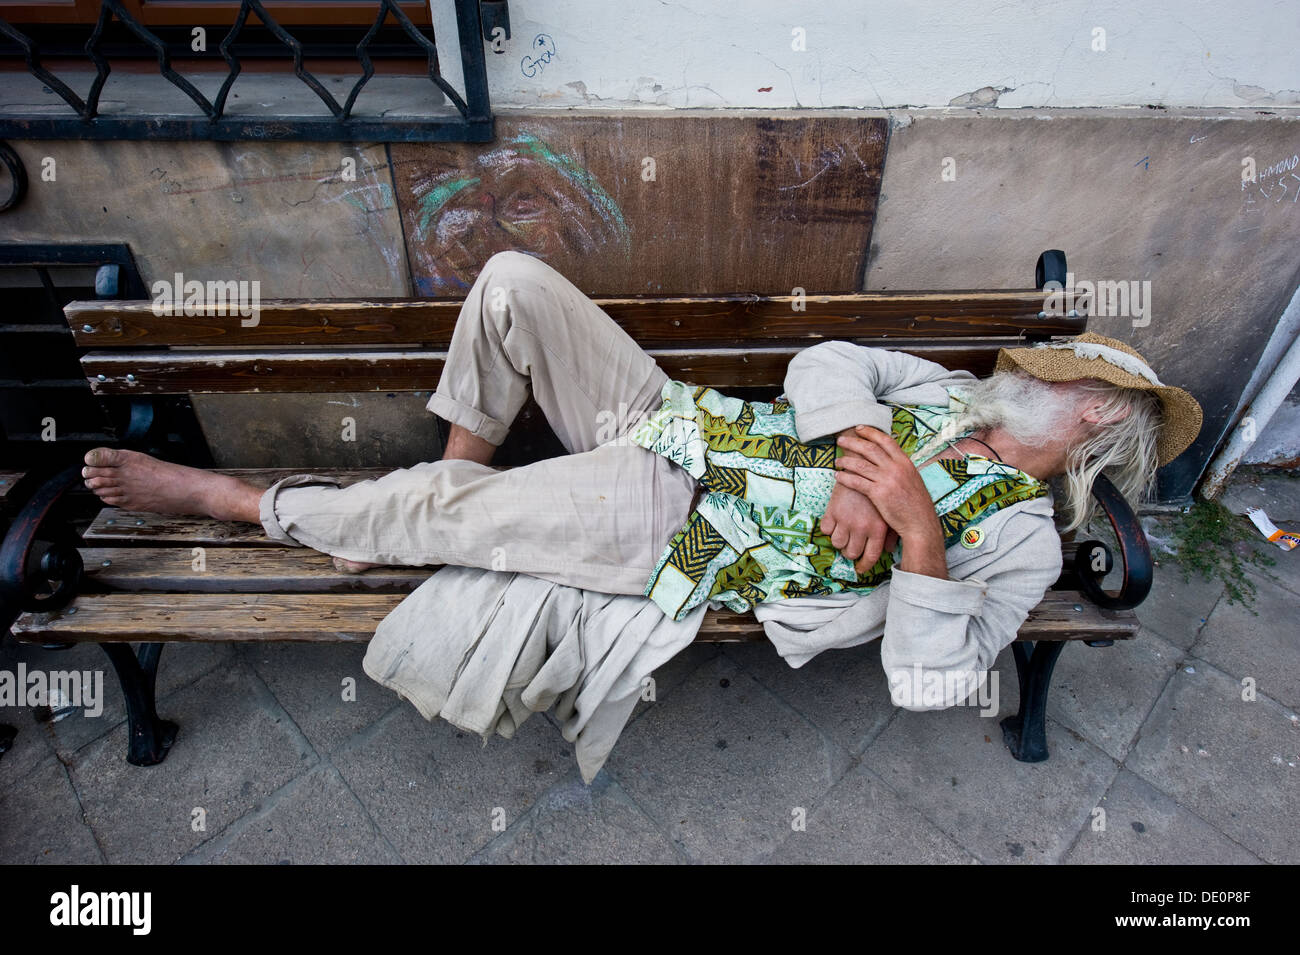 A hobo sleeping on a bench in Kazimierz Dolny. Stock Photo